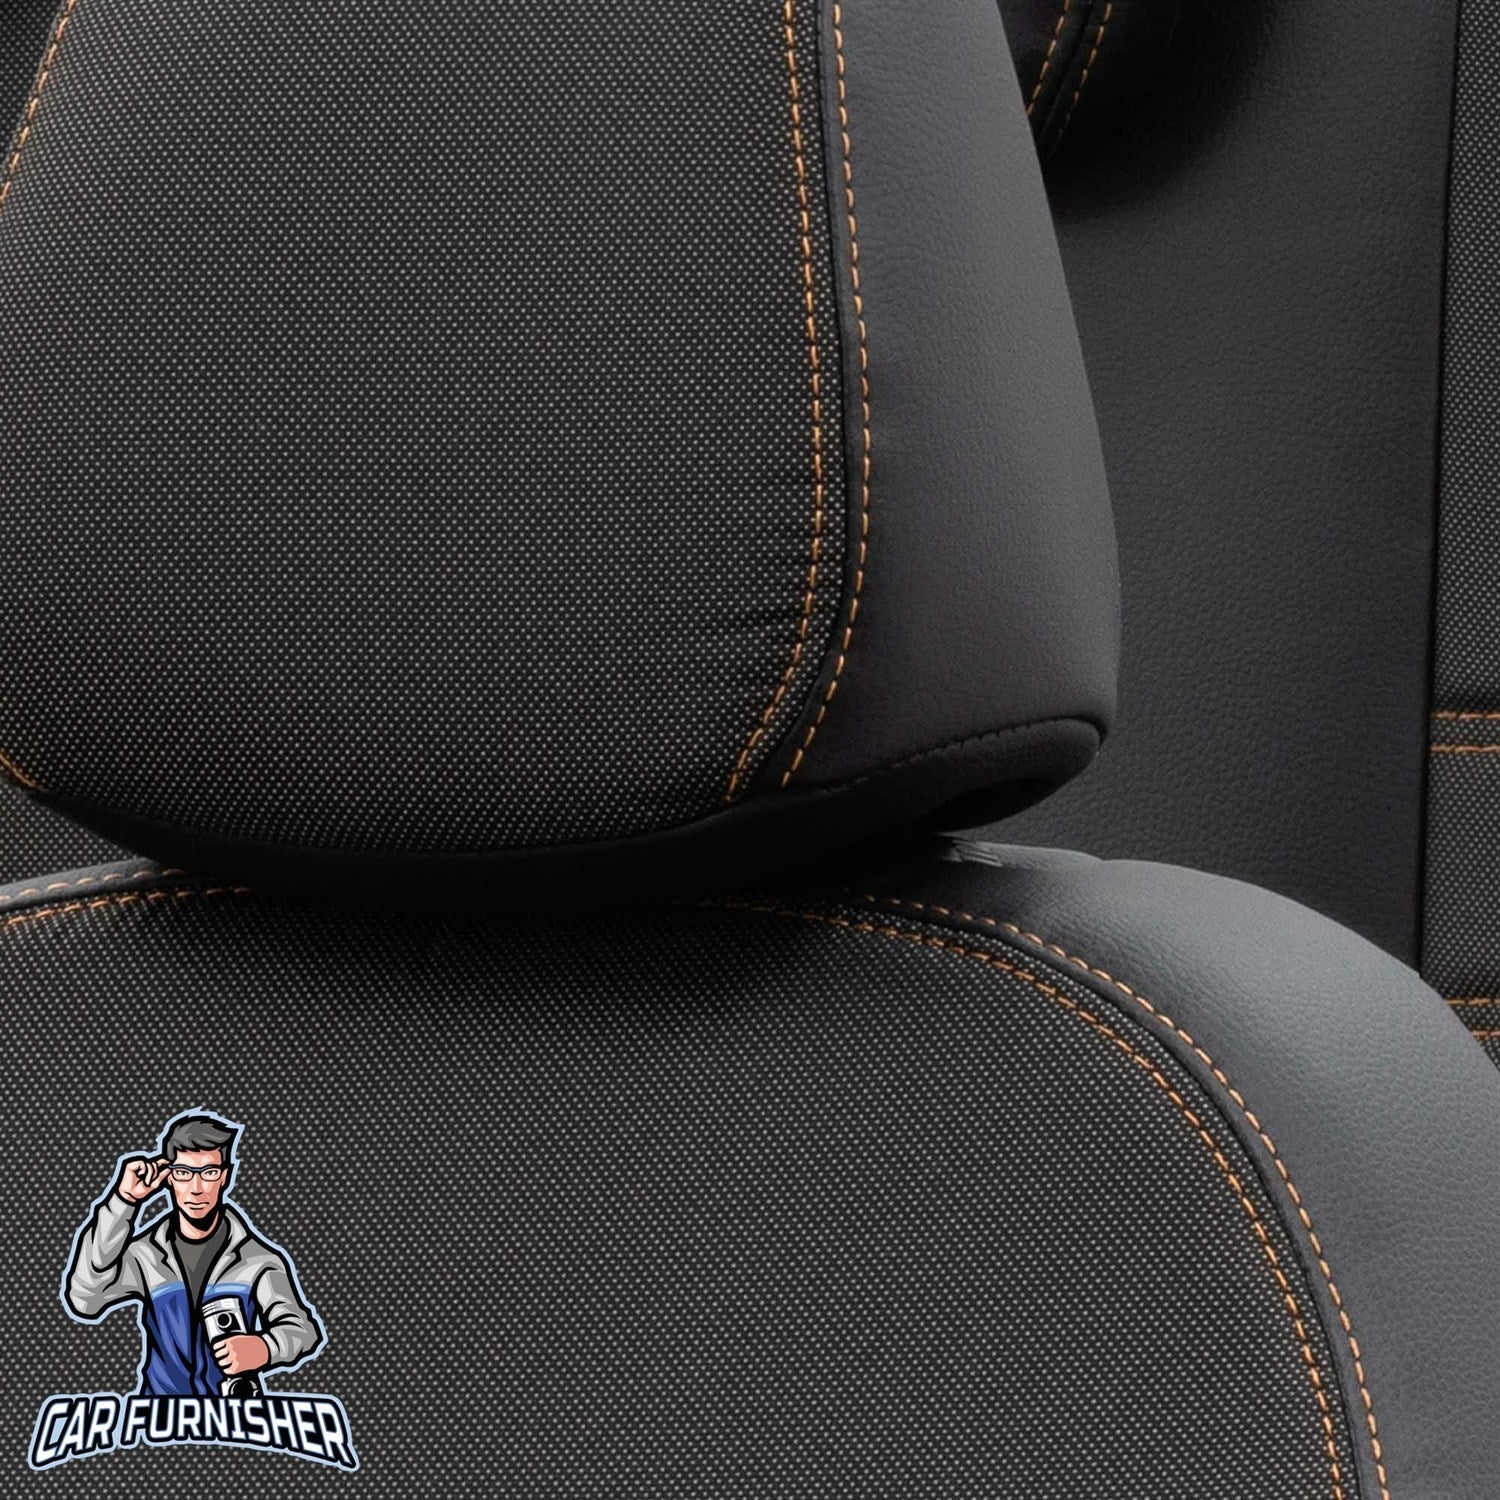 Fiat Stilo Seat Covers Paris Leather & Jacquard Design Dark Beige Leather & Jacquard Fabric